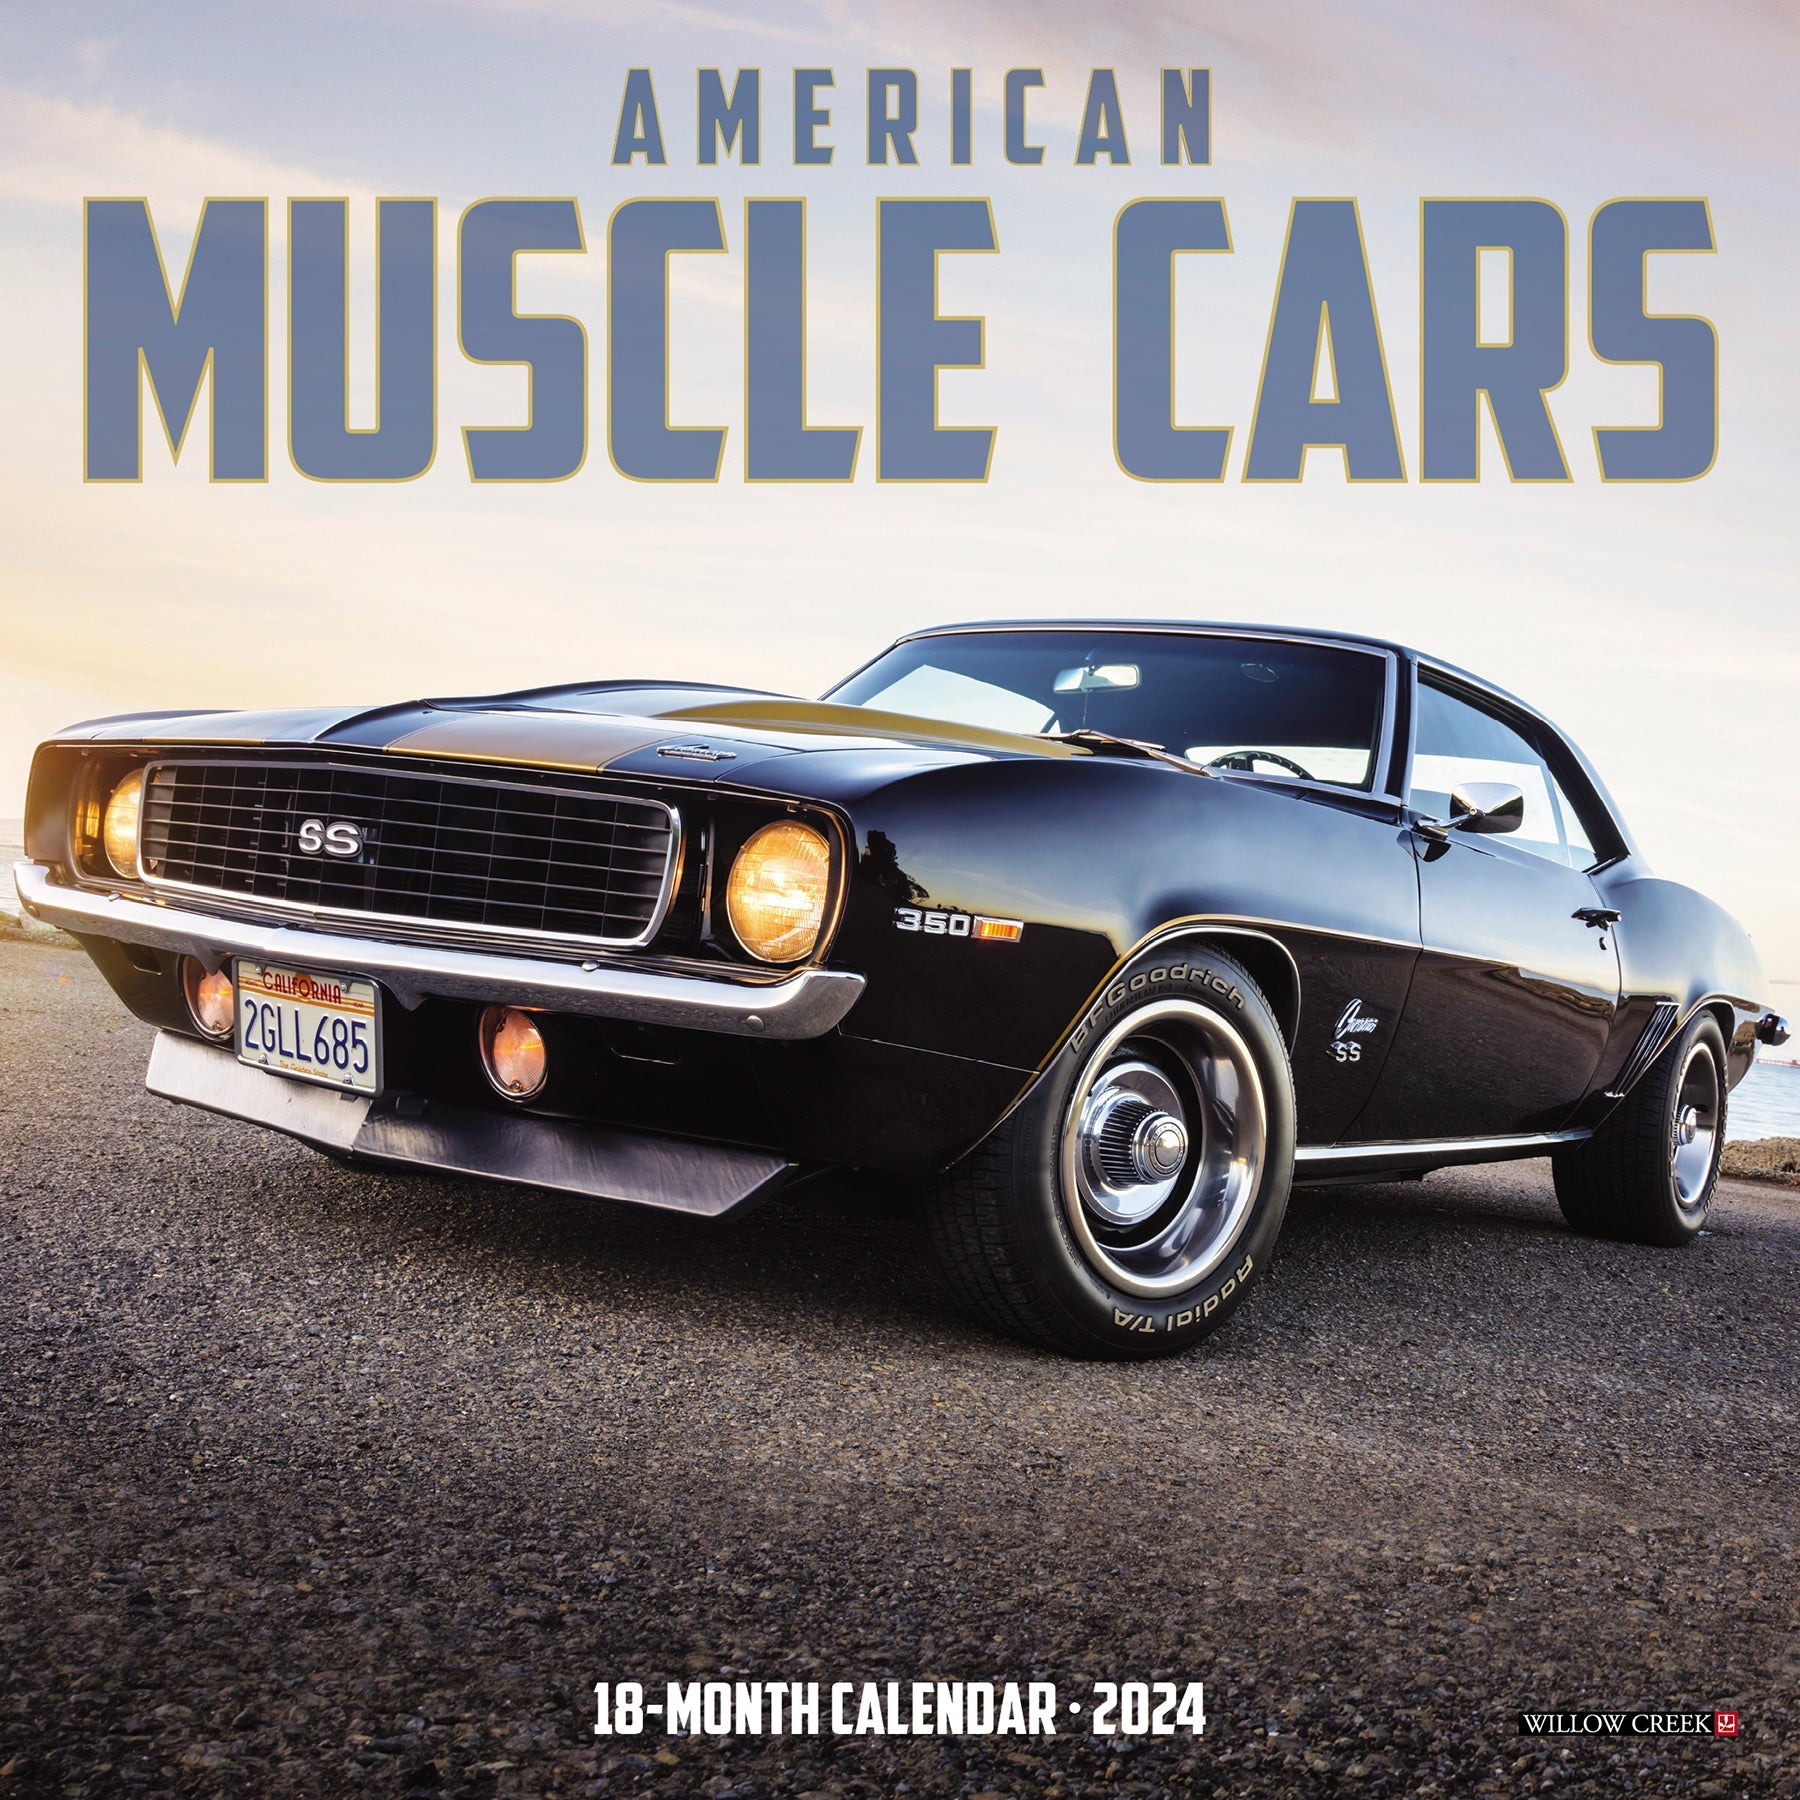 2024 American Muscle Cars - Mini Wall Calendar